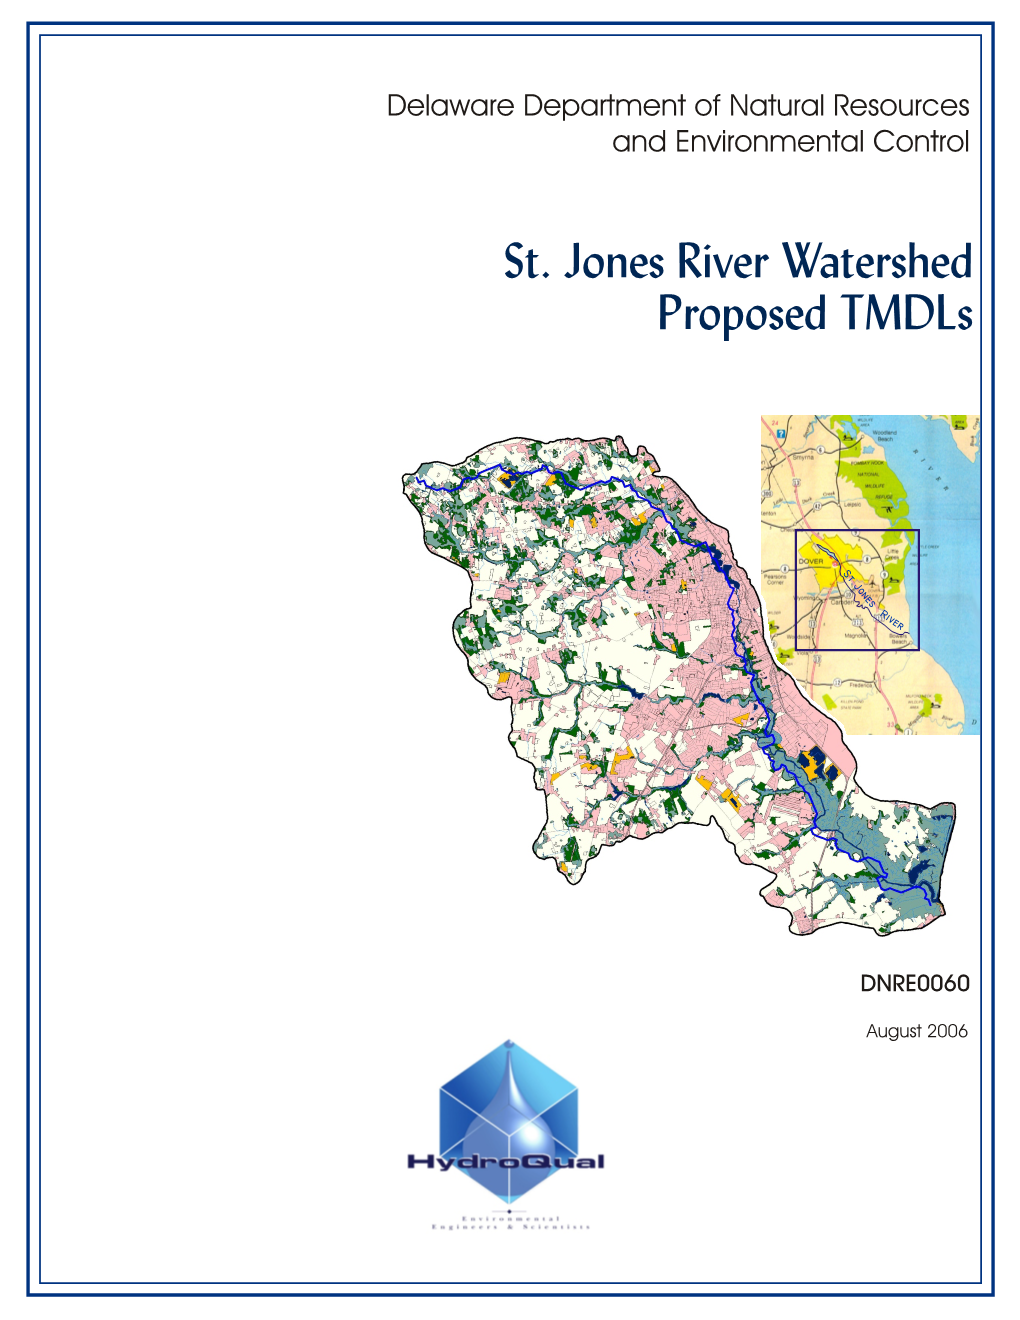 St. Jones River Watershed Proposed Tmdls